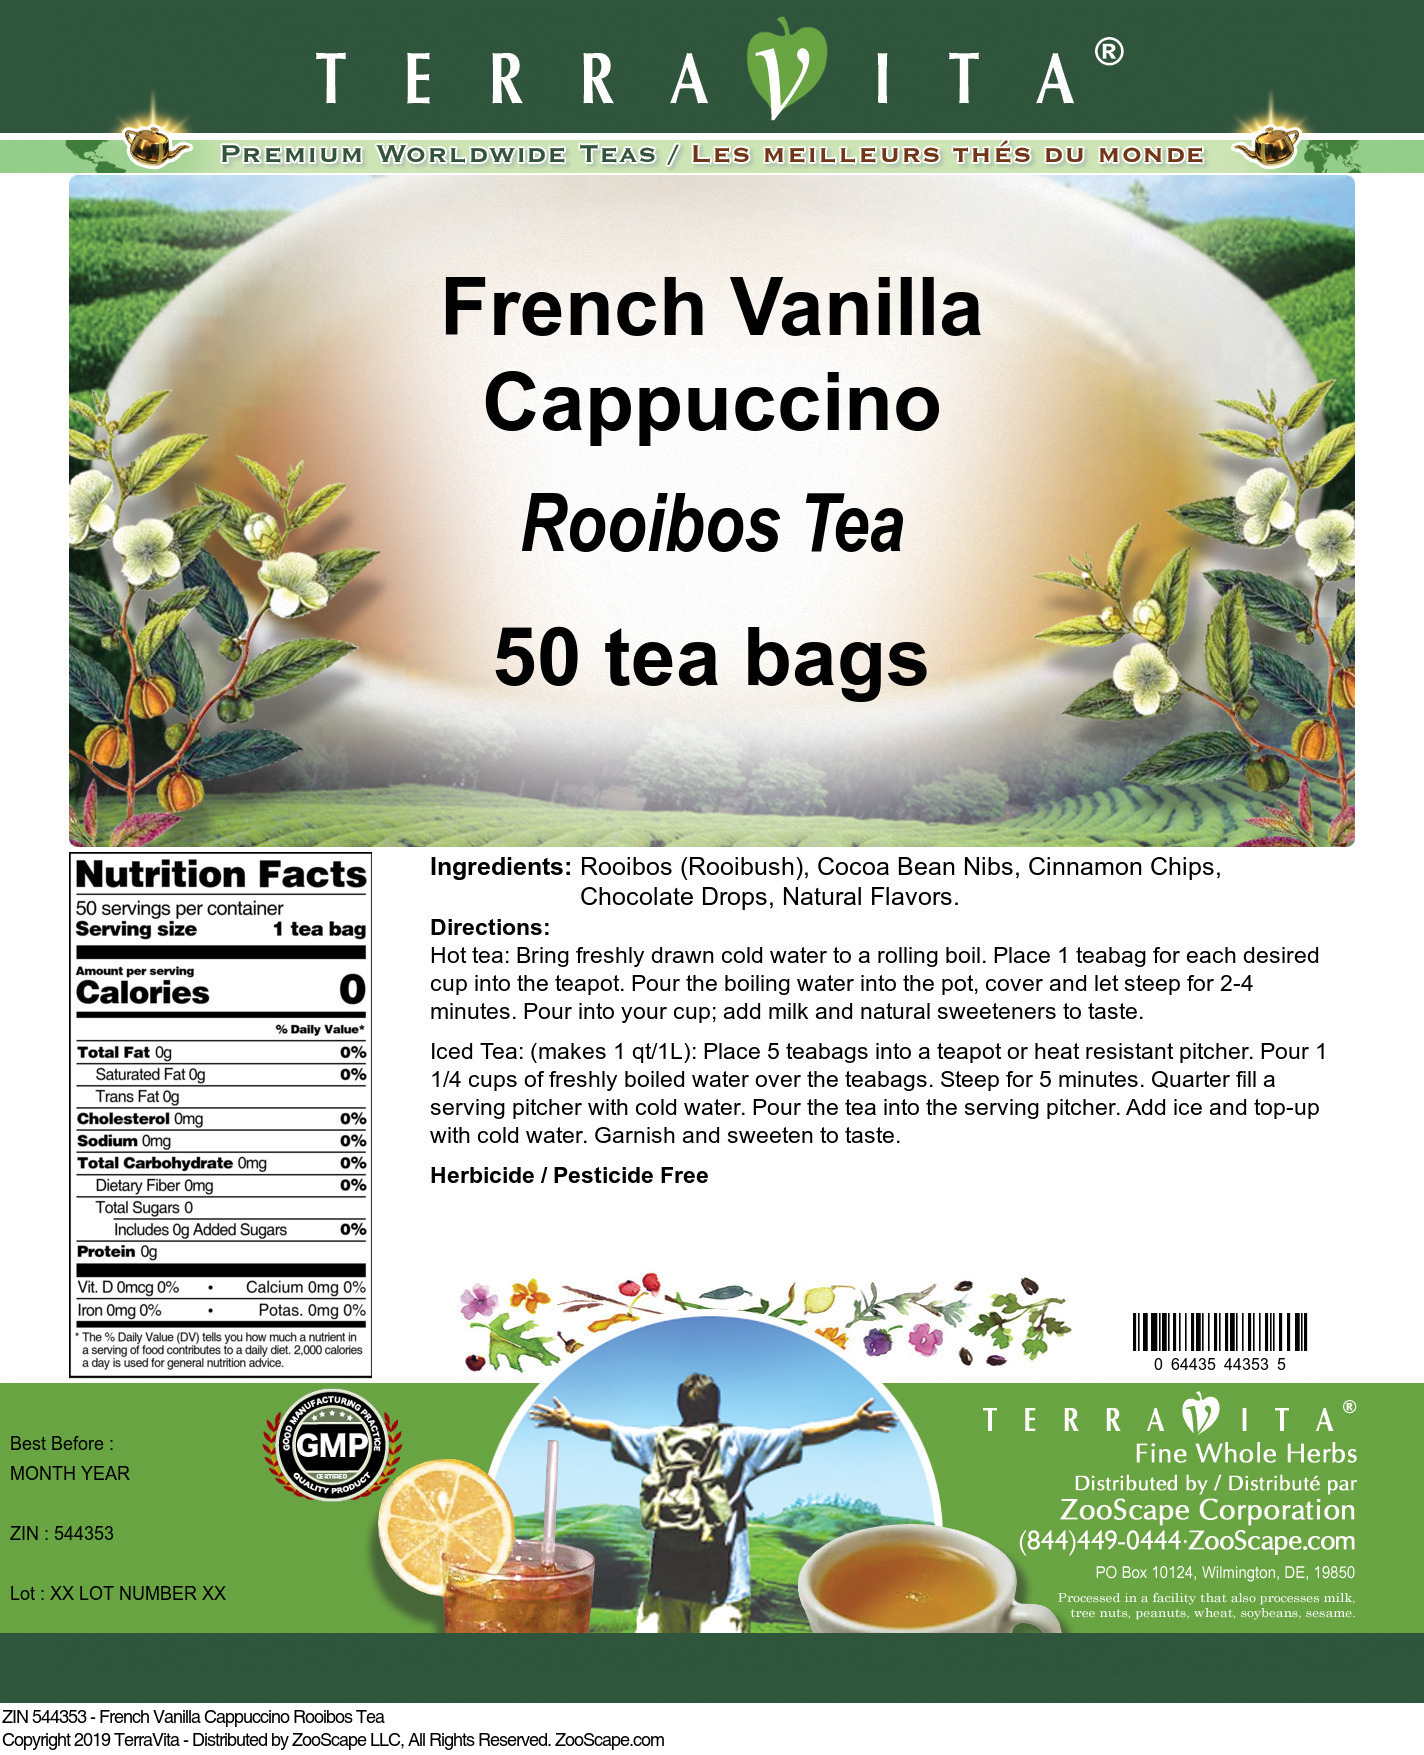 French Vanilla Cappuccino Rooibos Tea - Label